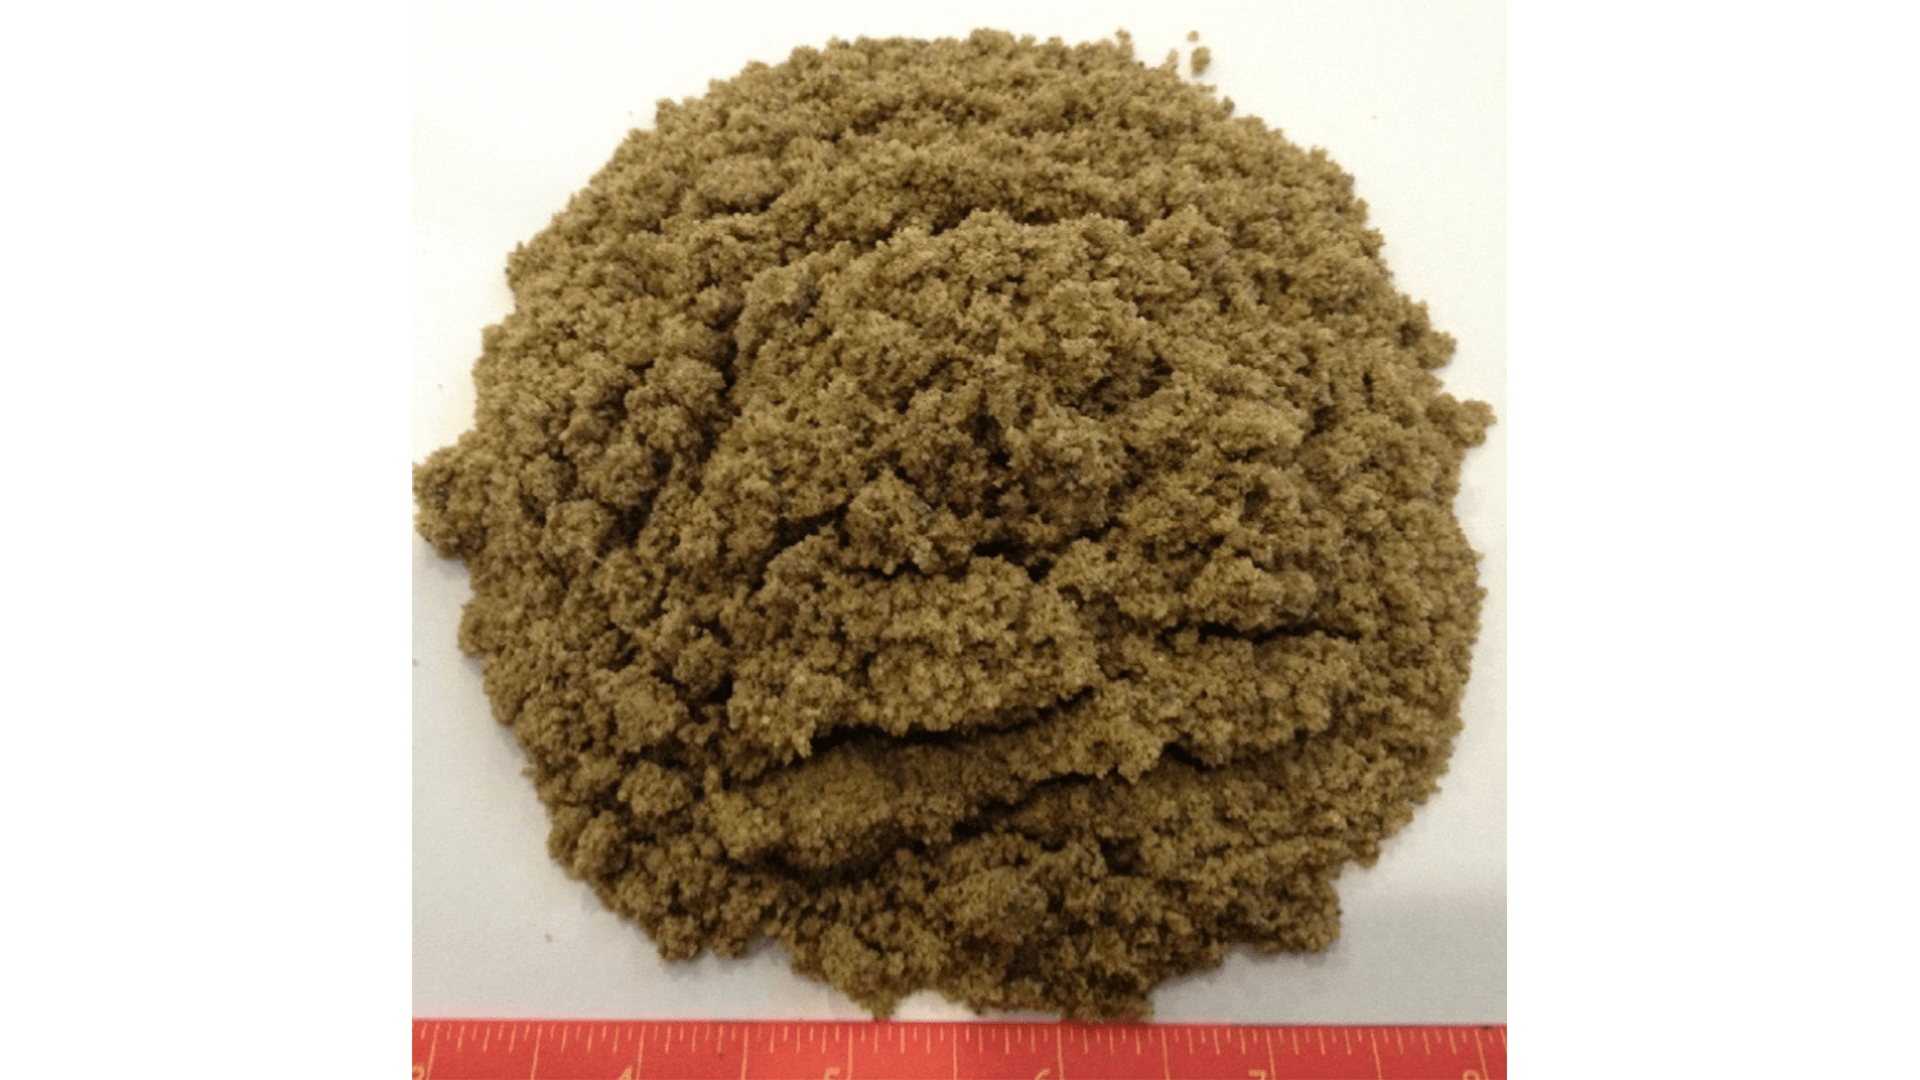 Washed Plaster Sand - Soil Amendments